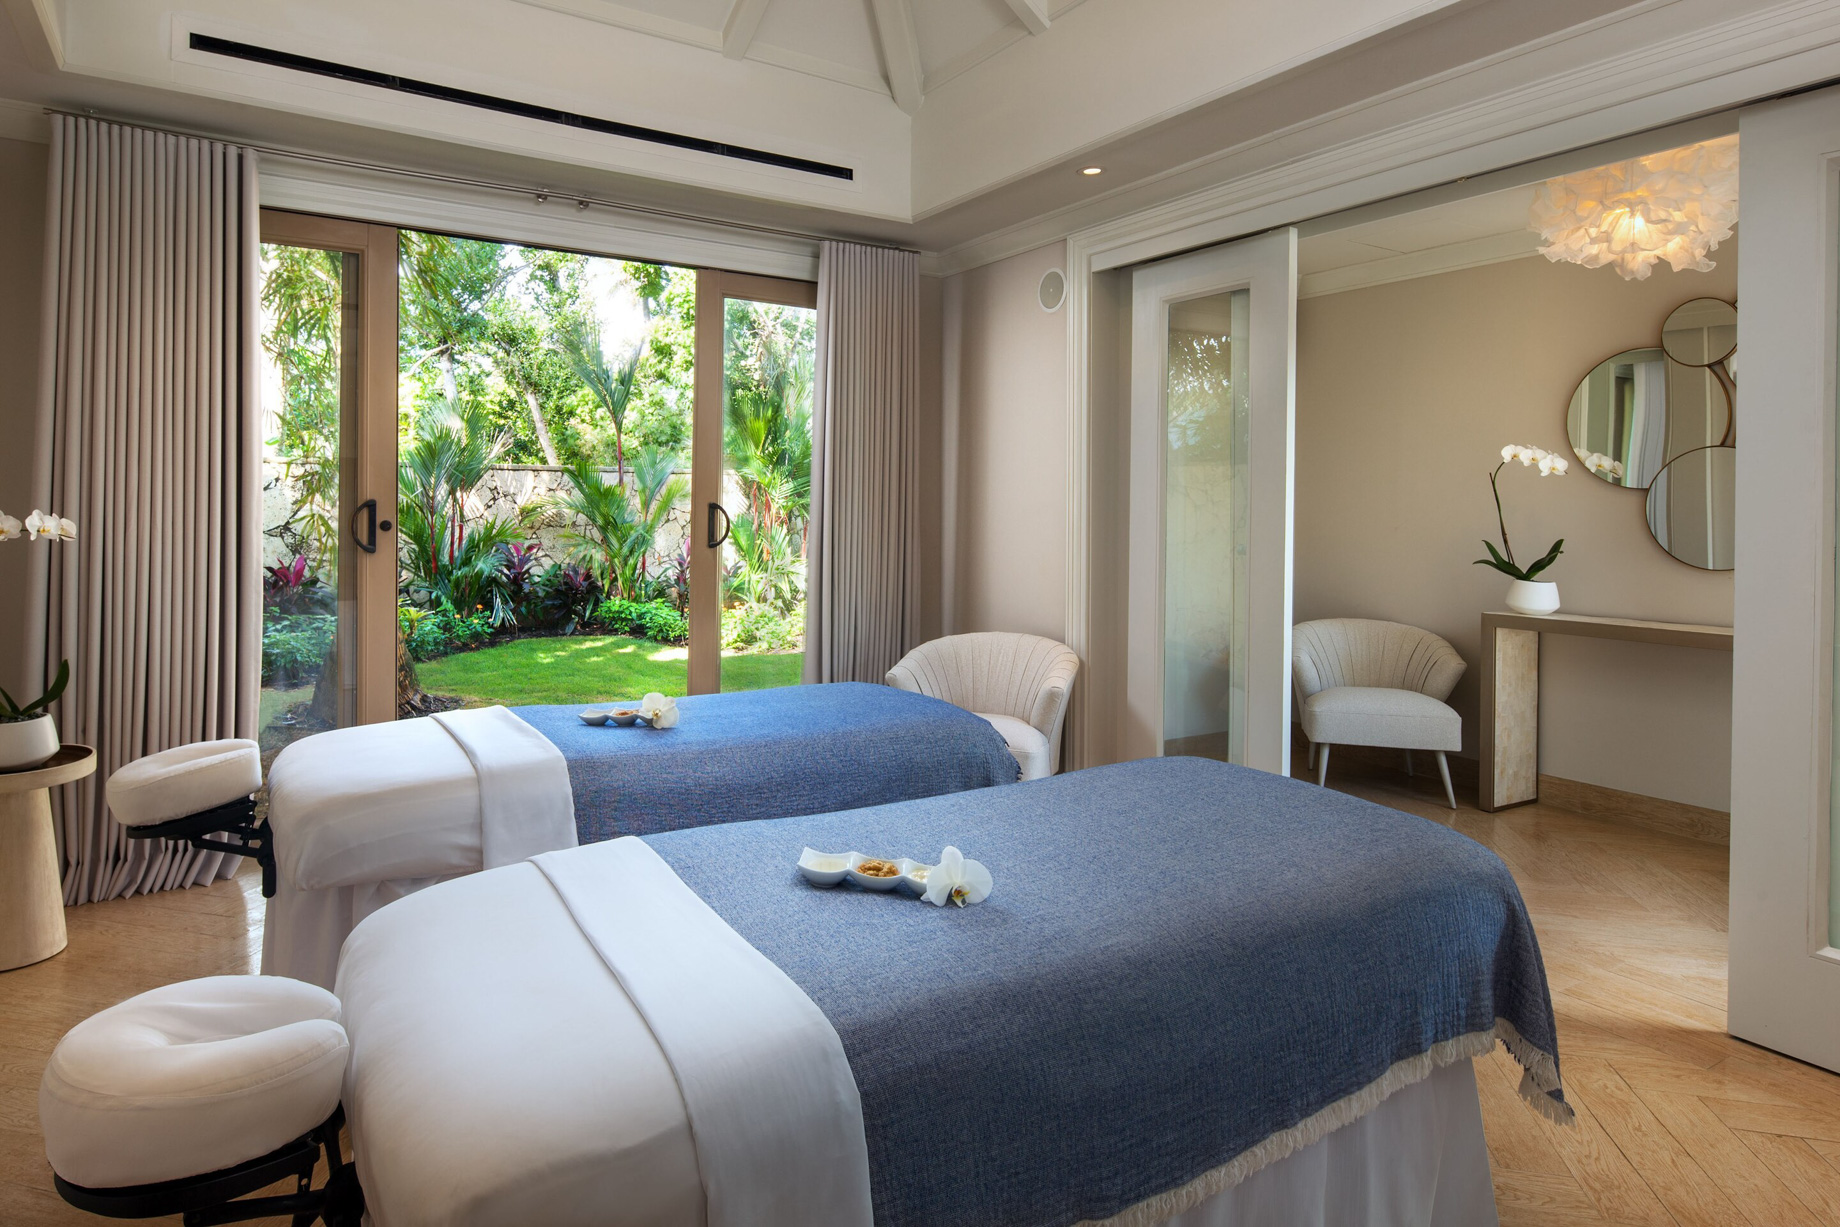 The St. Regis Bahia Beach Resort – Rio Grande, Puerto Rico – Iridium Spa Massage Room